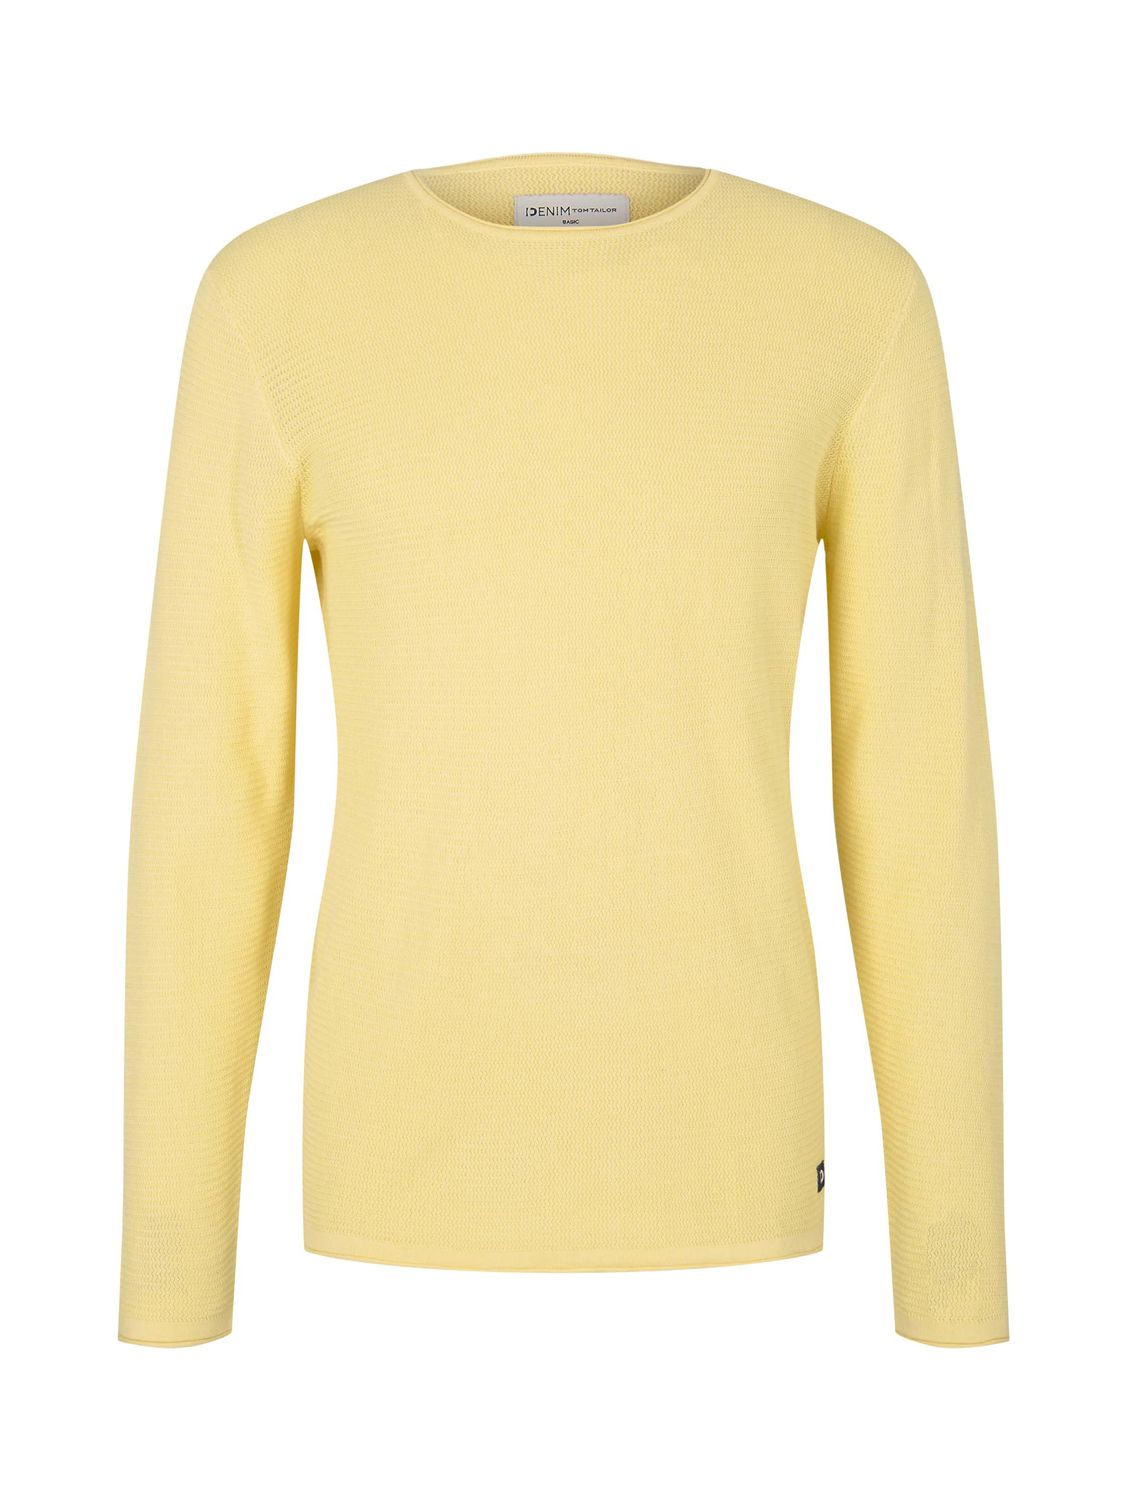 Пуловер TOM TAILOR Denim STRUKTURIERTER, желтый детская толстовка tom tailor желтый